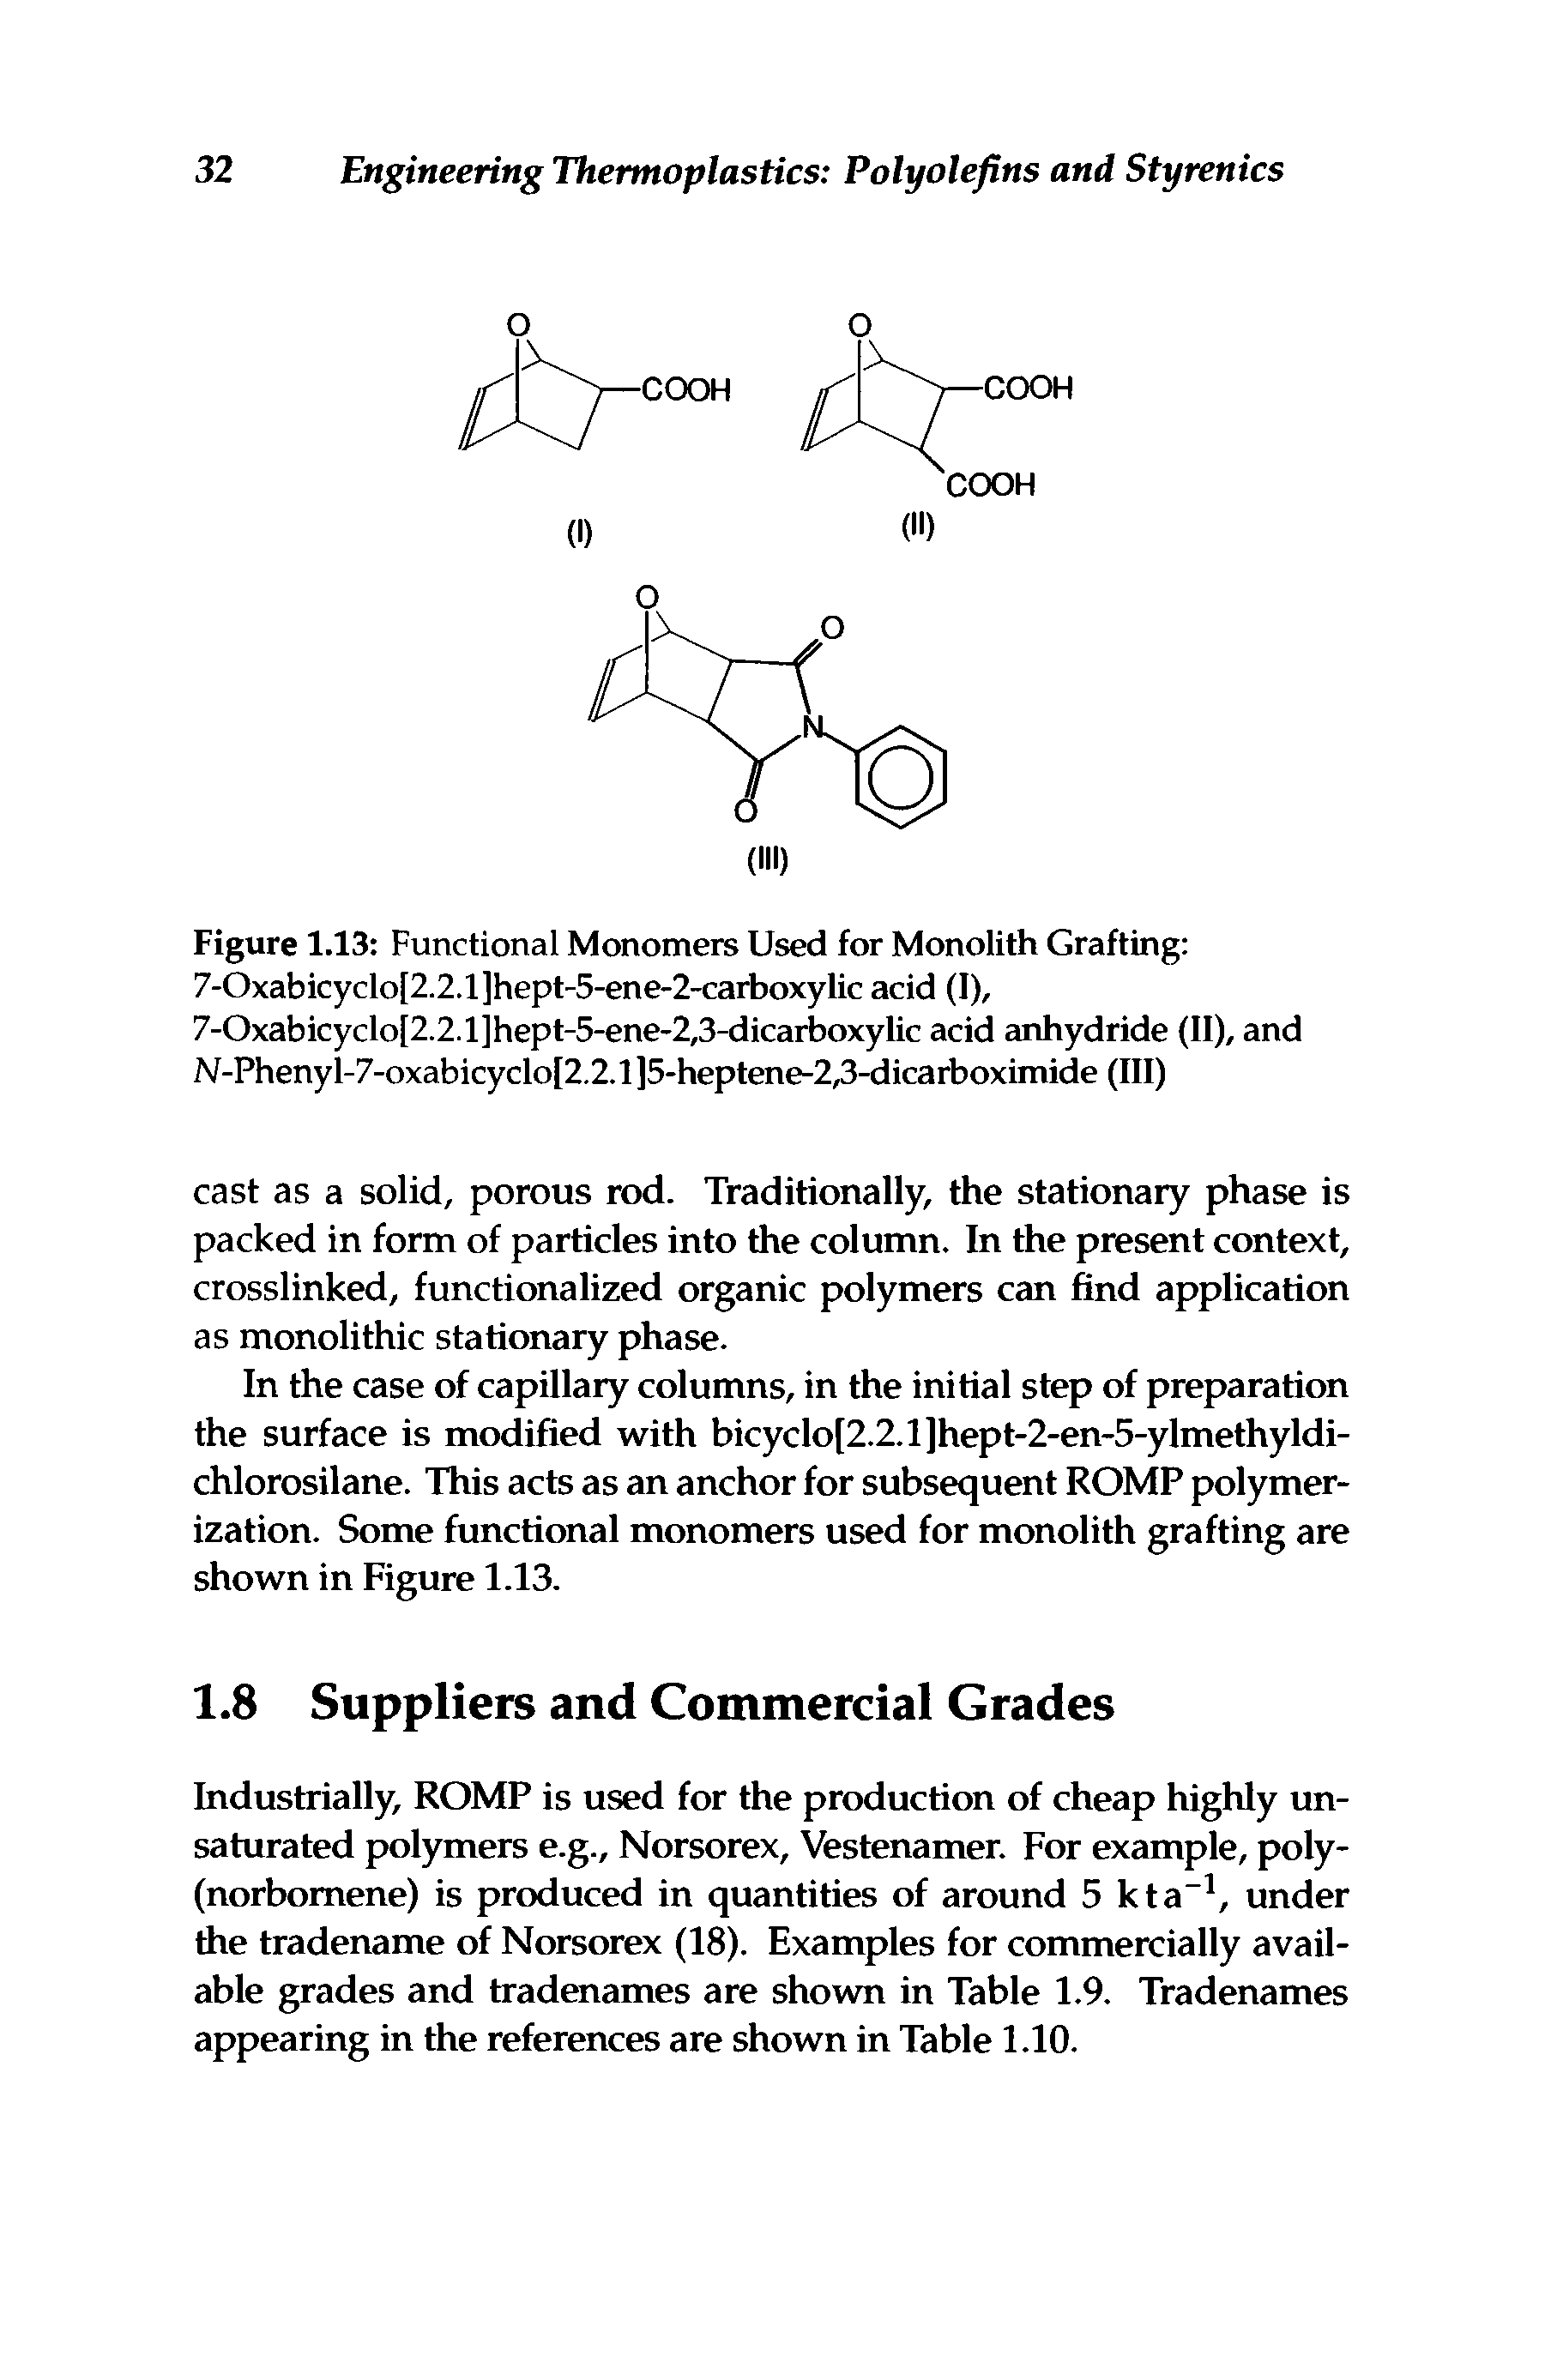 Figure 1.13 Functional Monomers Used for Monolith Grafting 7-Oxabicyclo[2.2.1]hept-5-ene-2-carboxylic acid (I), 7-Oxabicyclo[2.2.1]hept-5-ene-2,3-dicarboxylic acid anhydride (II), and N-Phenyl-7-oxabicyclo[2.2.1]5-heptene-2,3-dicarboximide (III)...